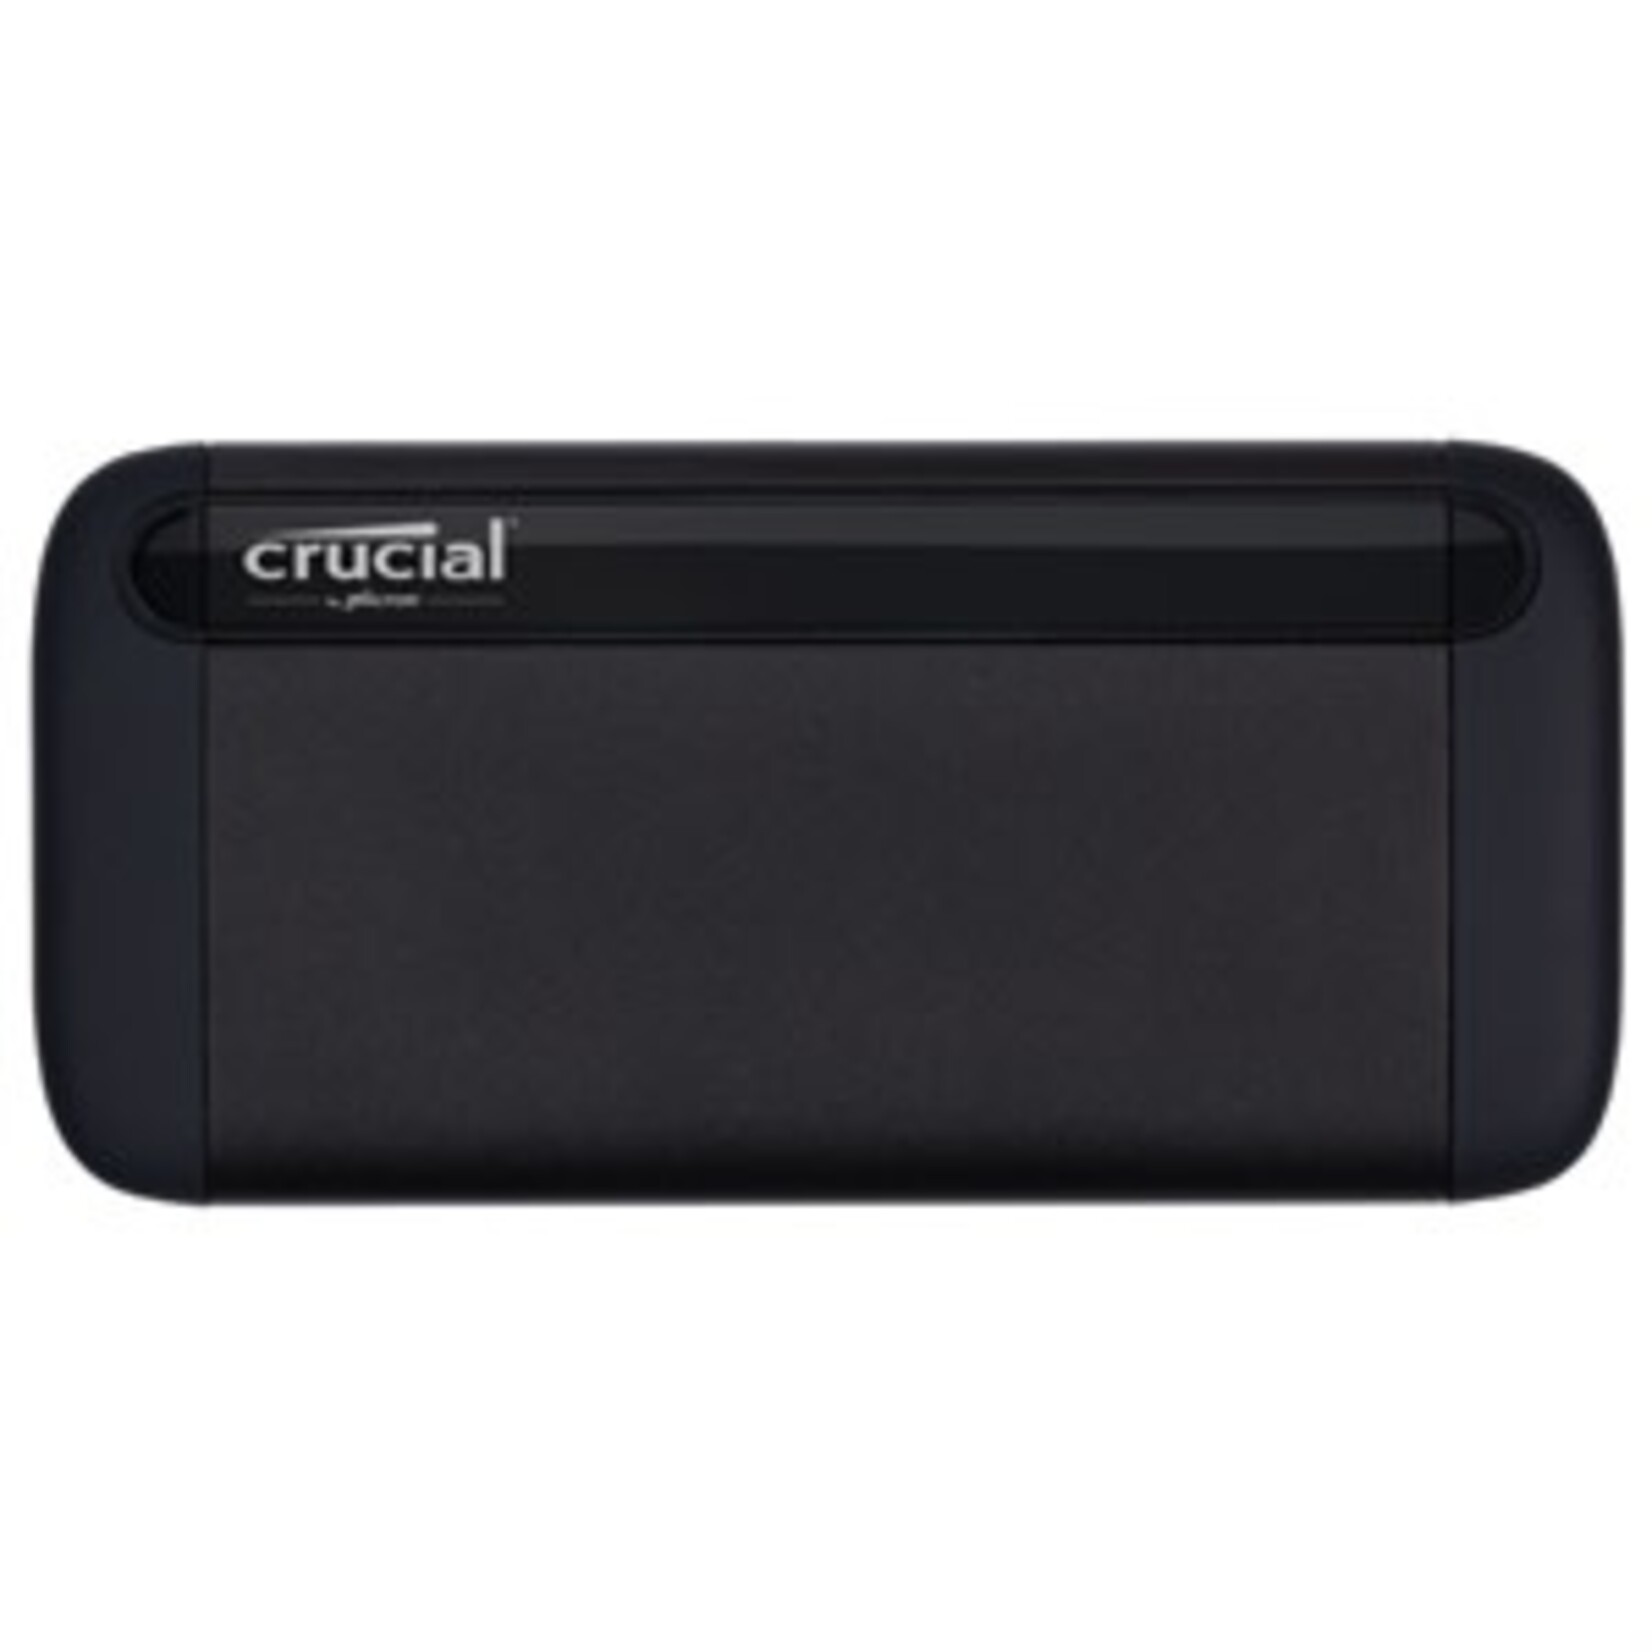 Crucial Crucial X8 1 TB External SSD